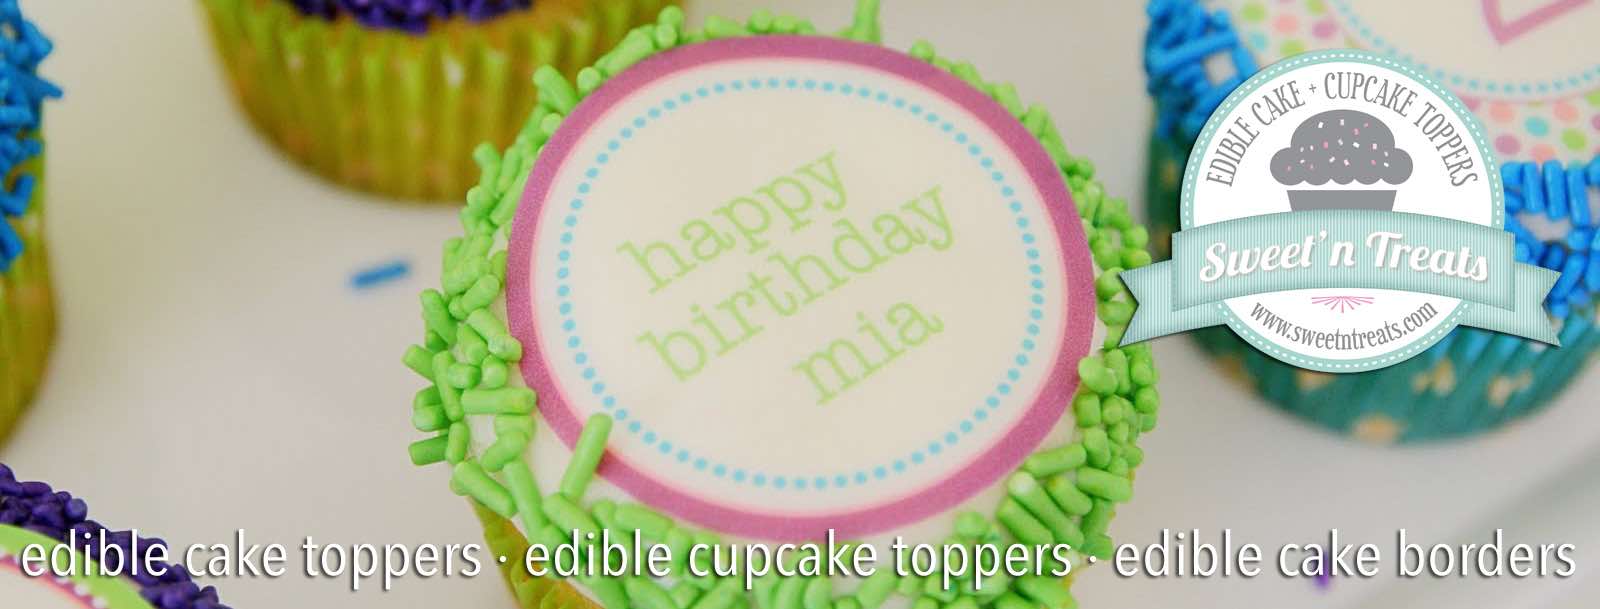 Sweet'n Treats  Custom Edible Cake and Cupcake Toppers